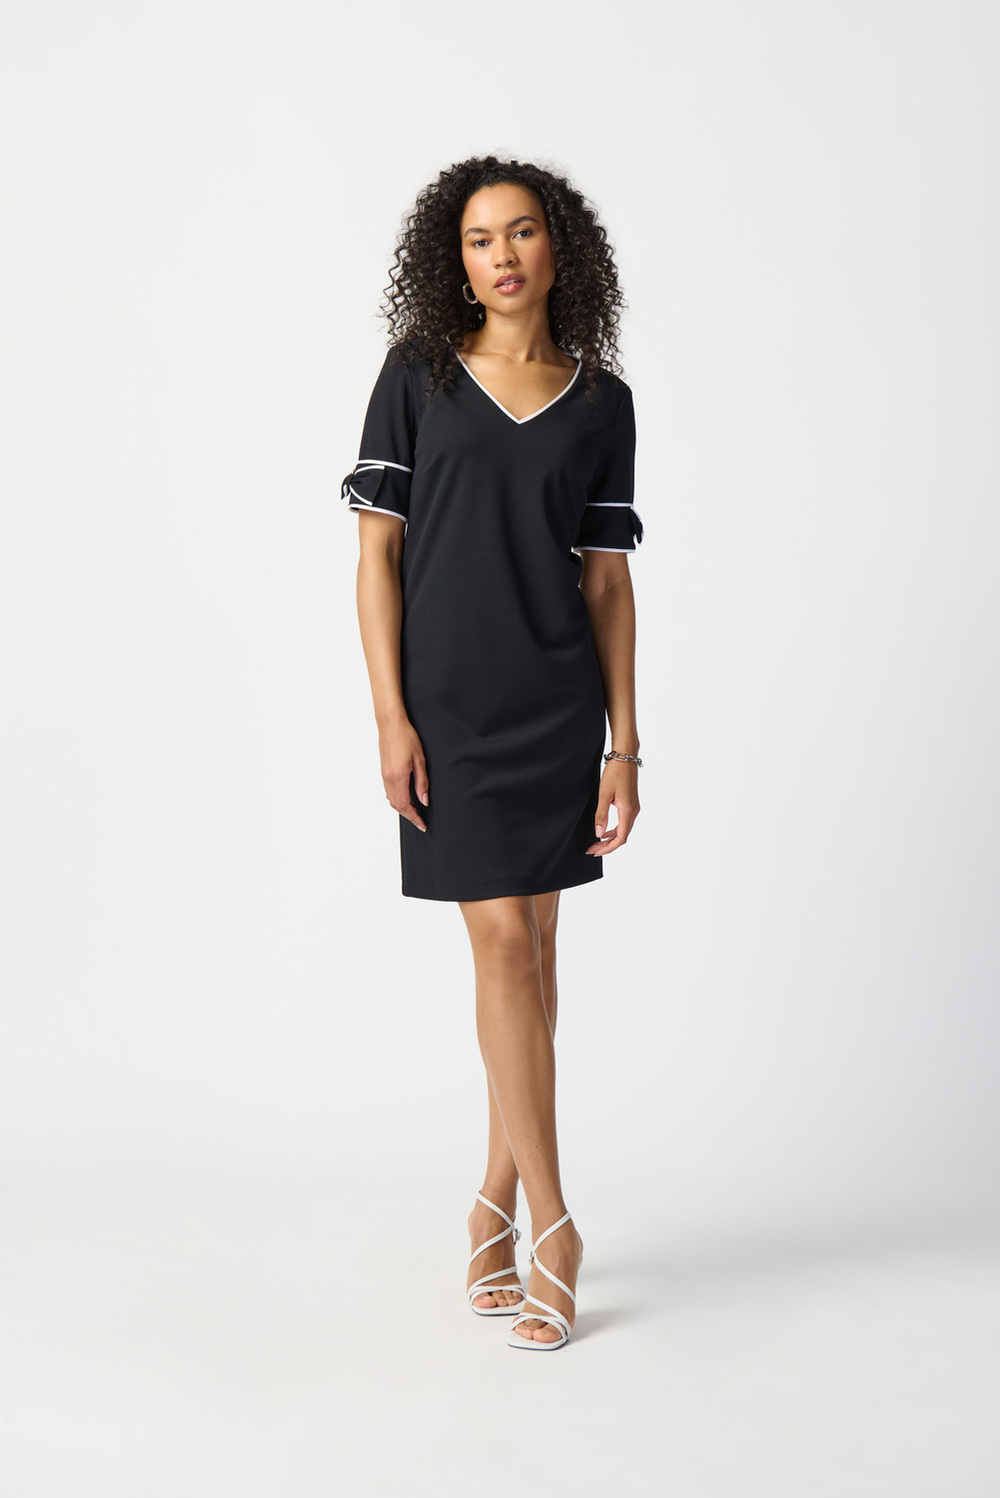 Bow Detail T-Shirt Dress Style 241130. Black/off White